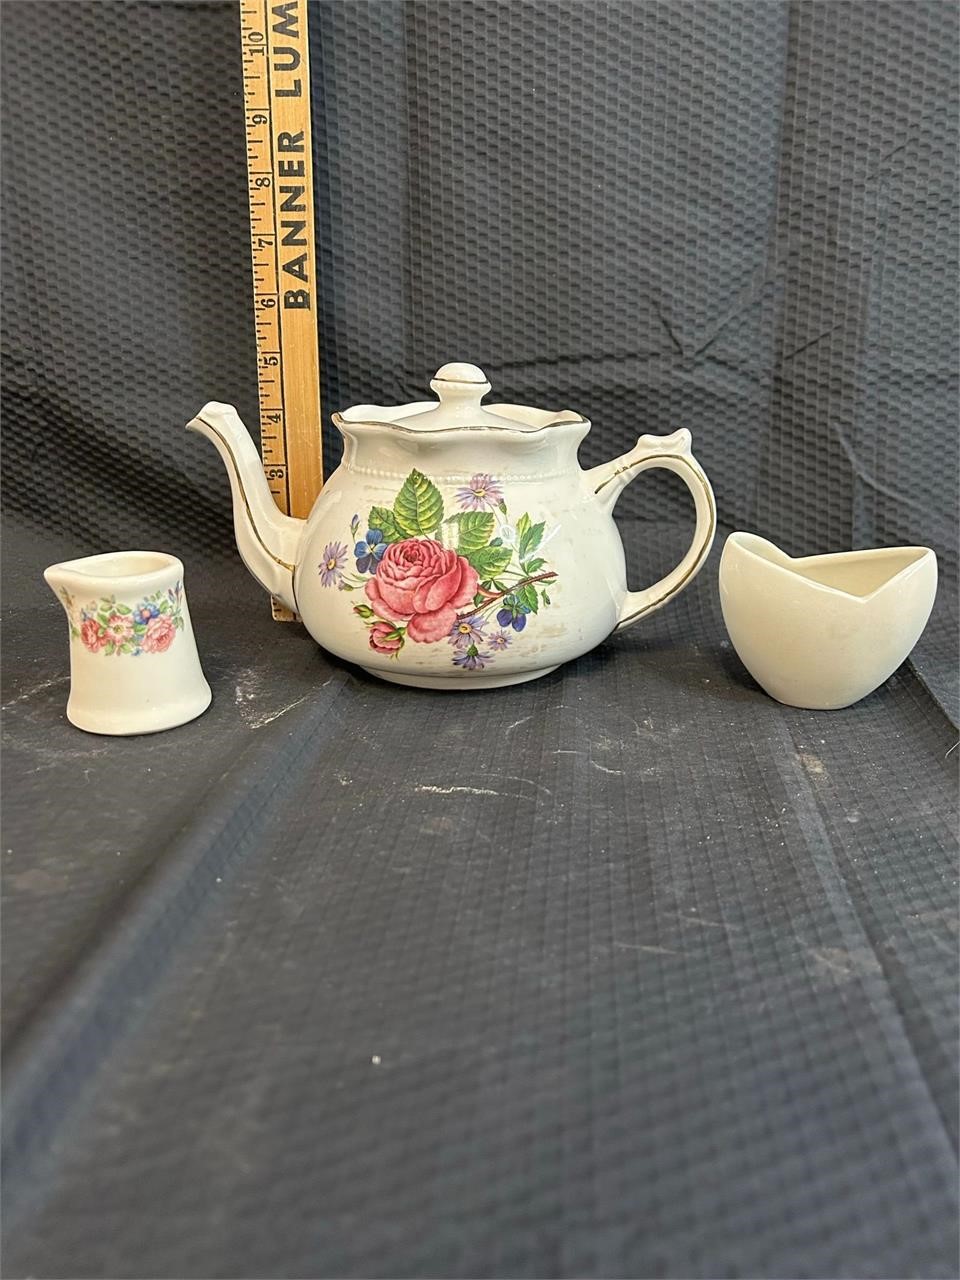 Vintage Porcelain Tea Pot Serving Set